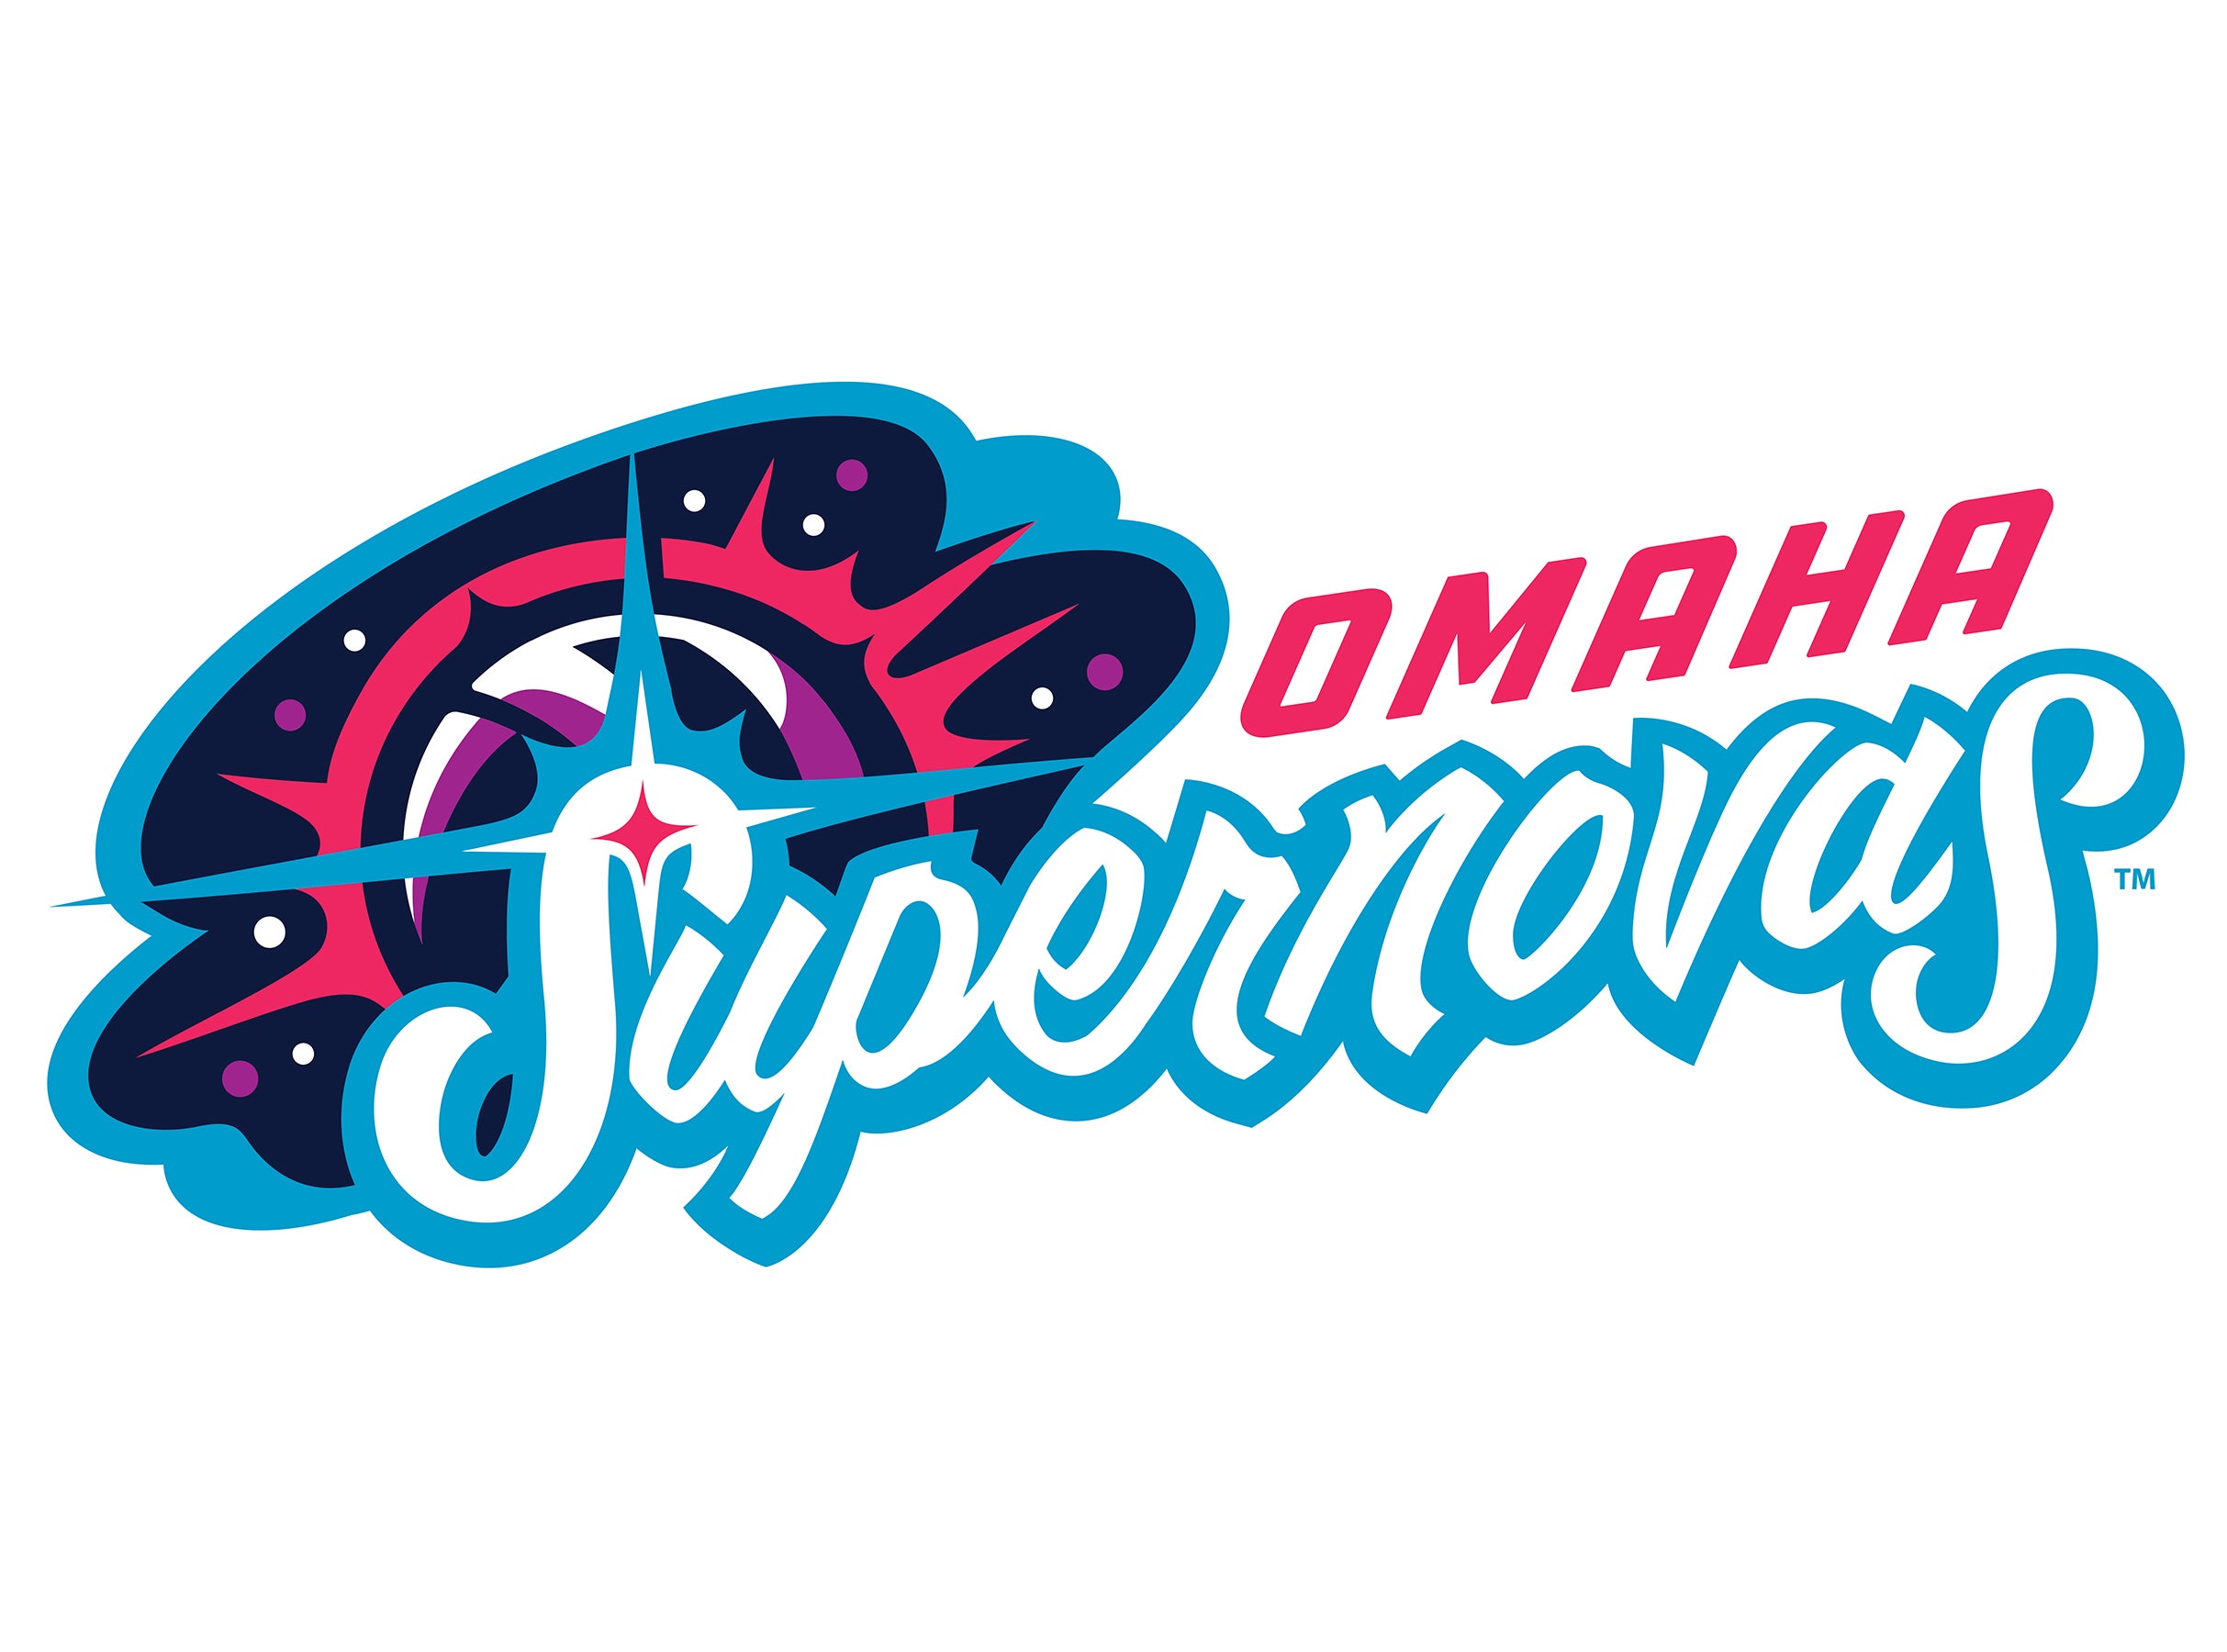 Omaha Supernovas v Columbus Fury